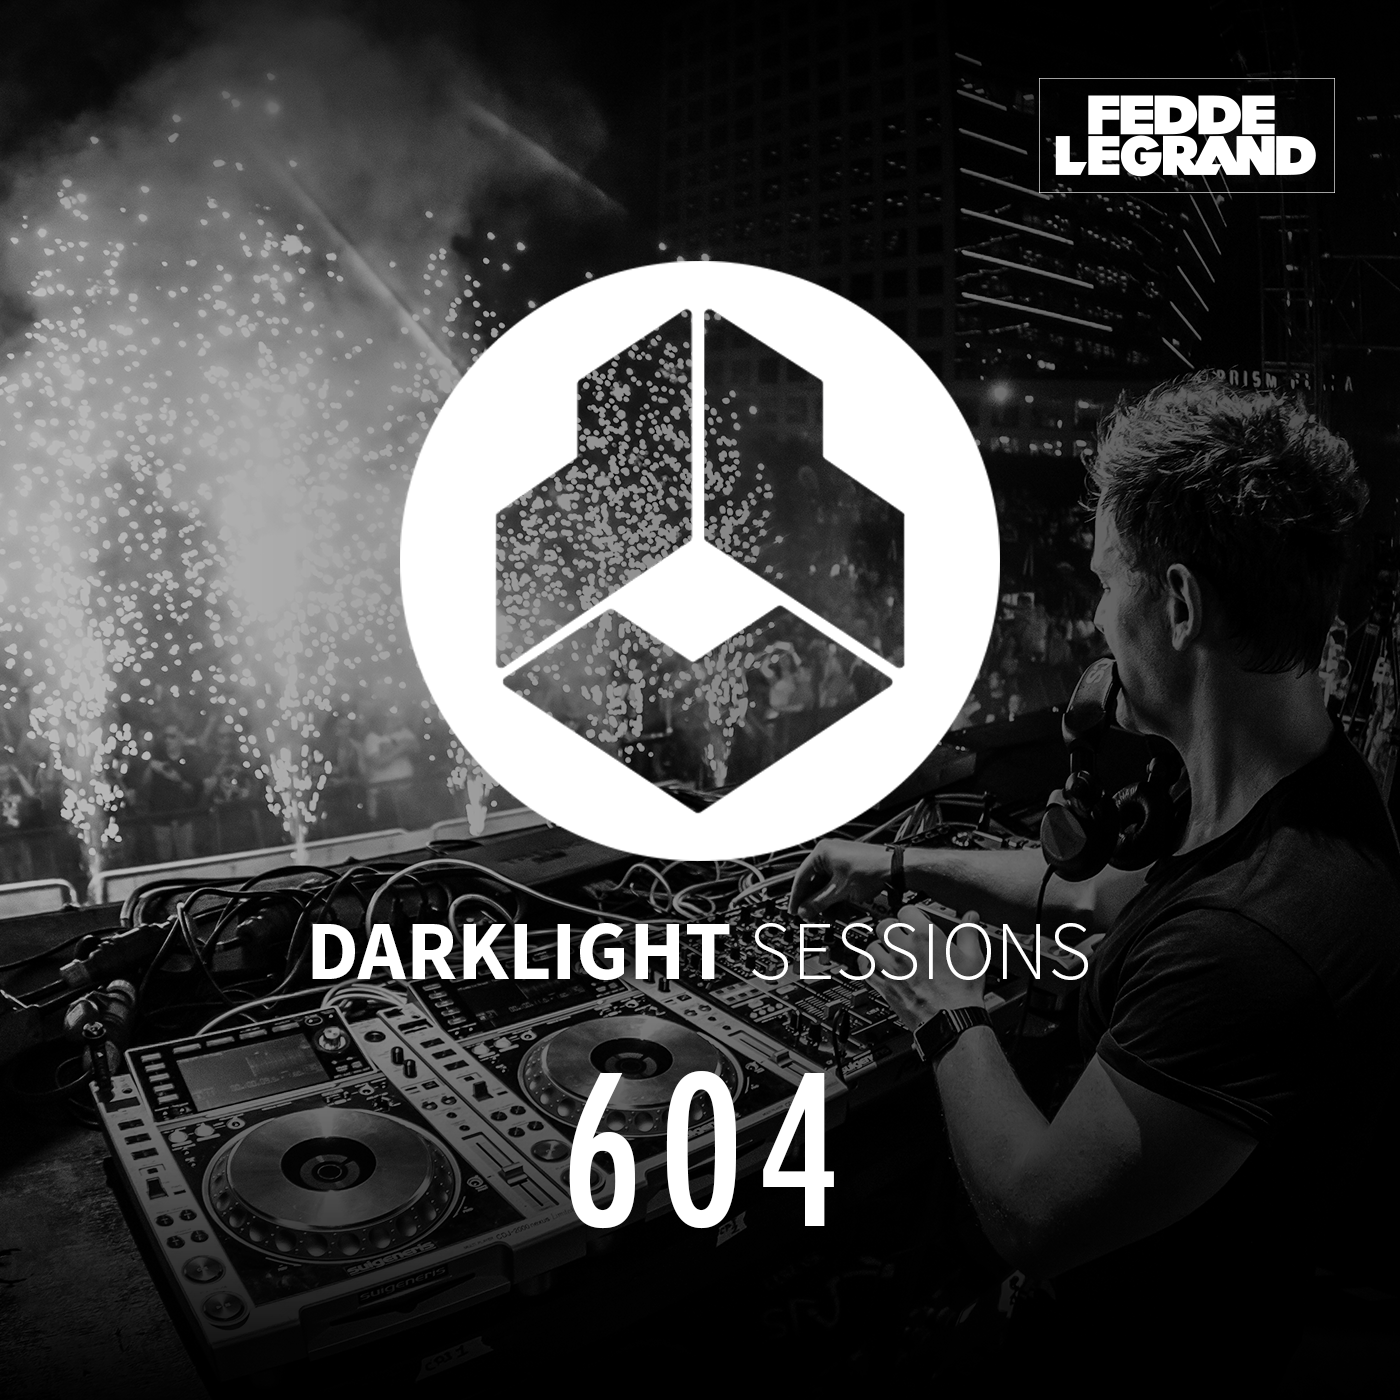 Darklight Sessions 604